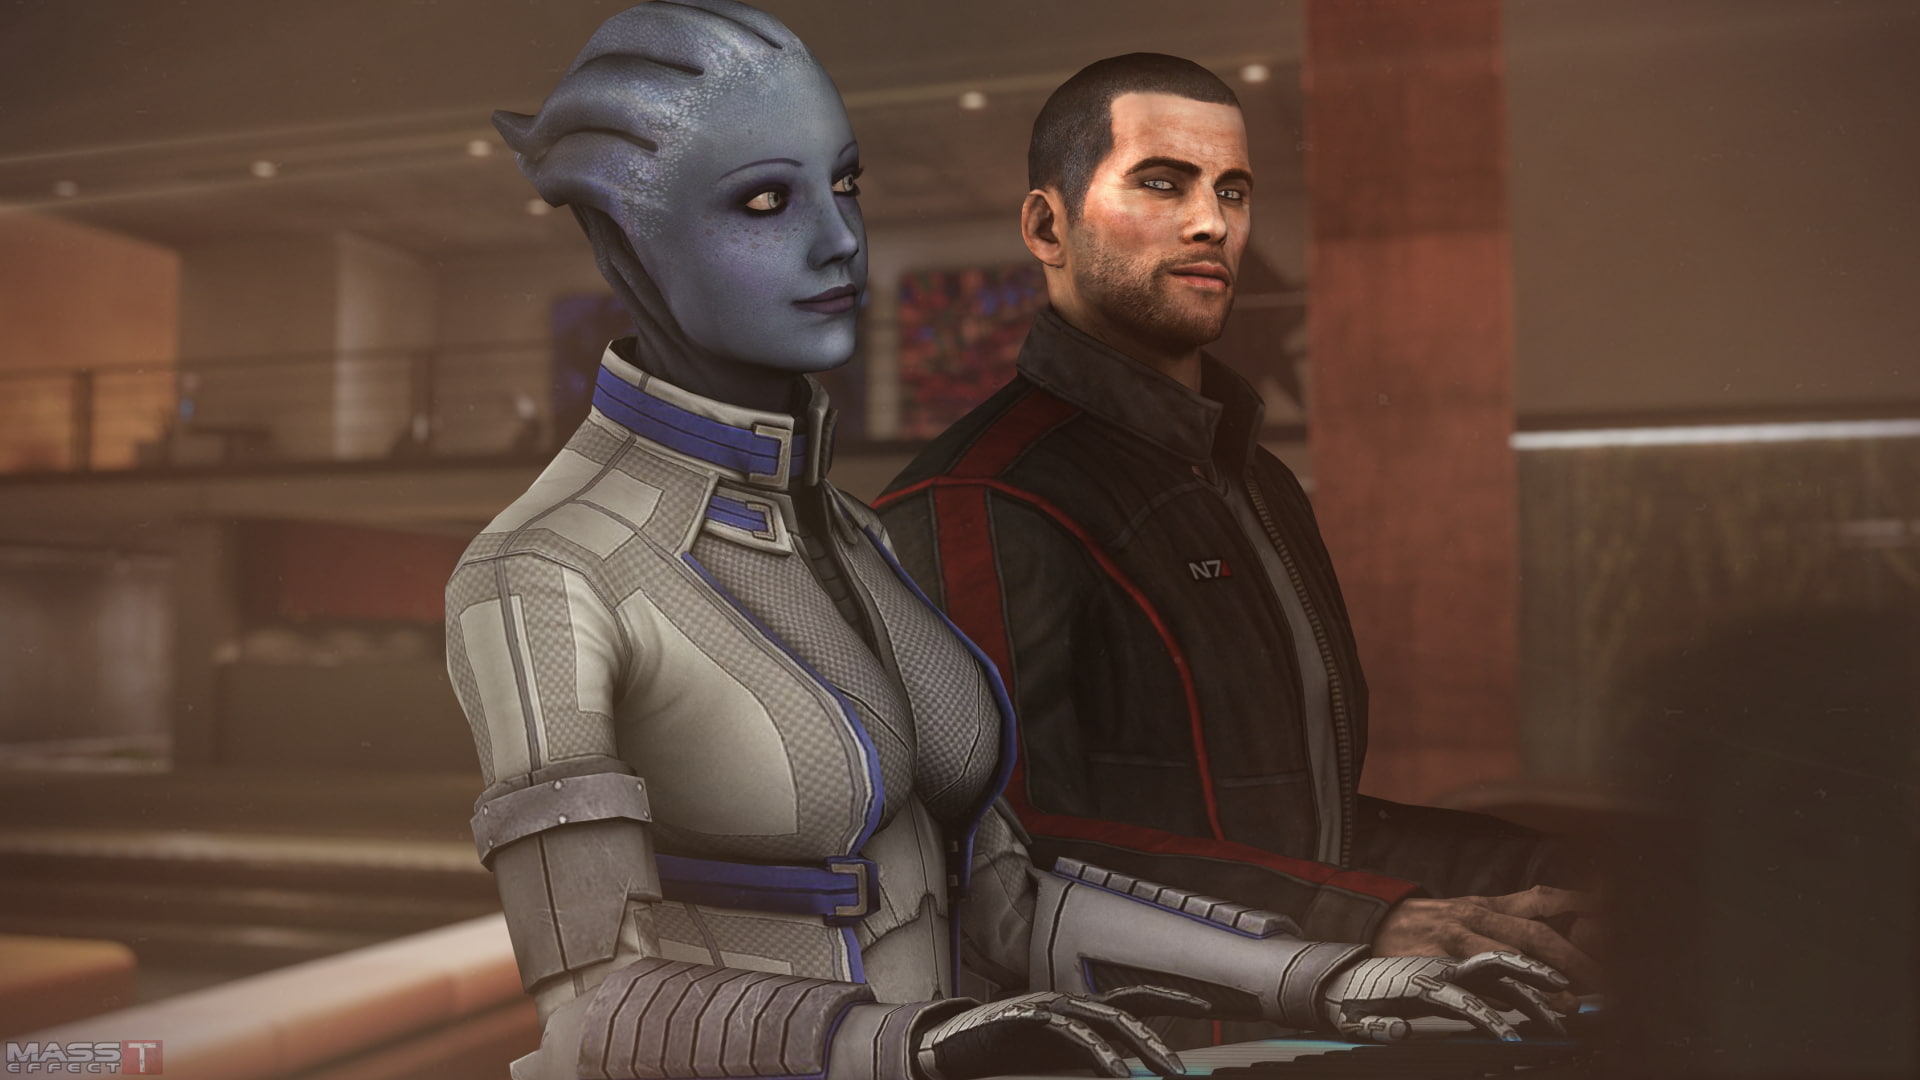 Mass Effect, Liara T'Soni, Commander Shepard, video games, young men